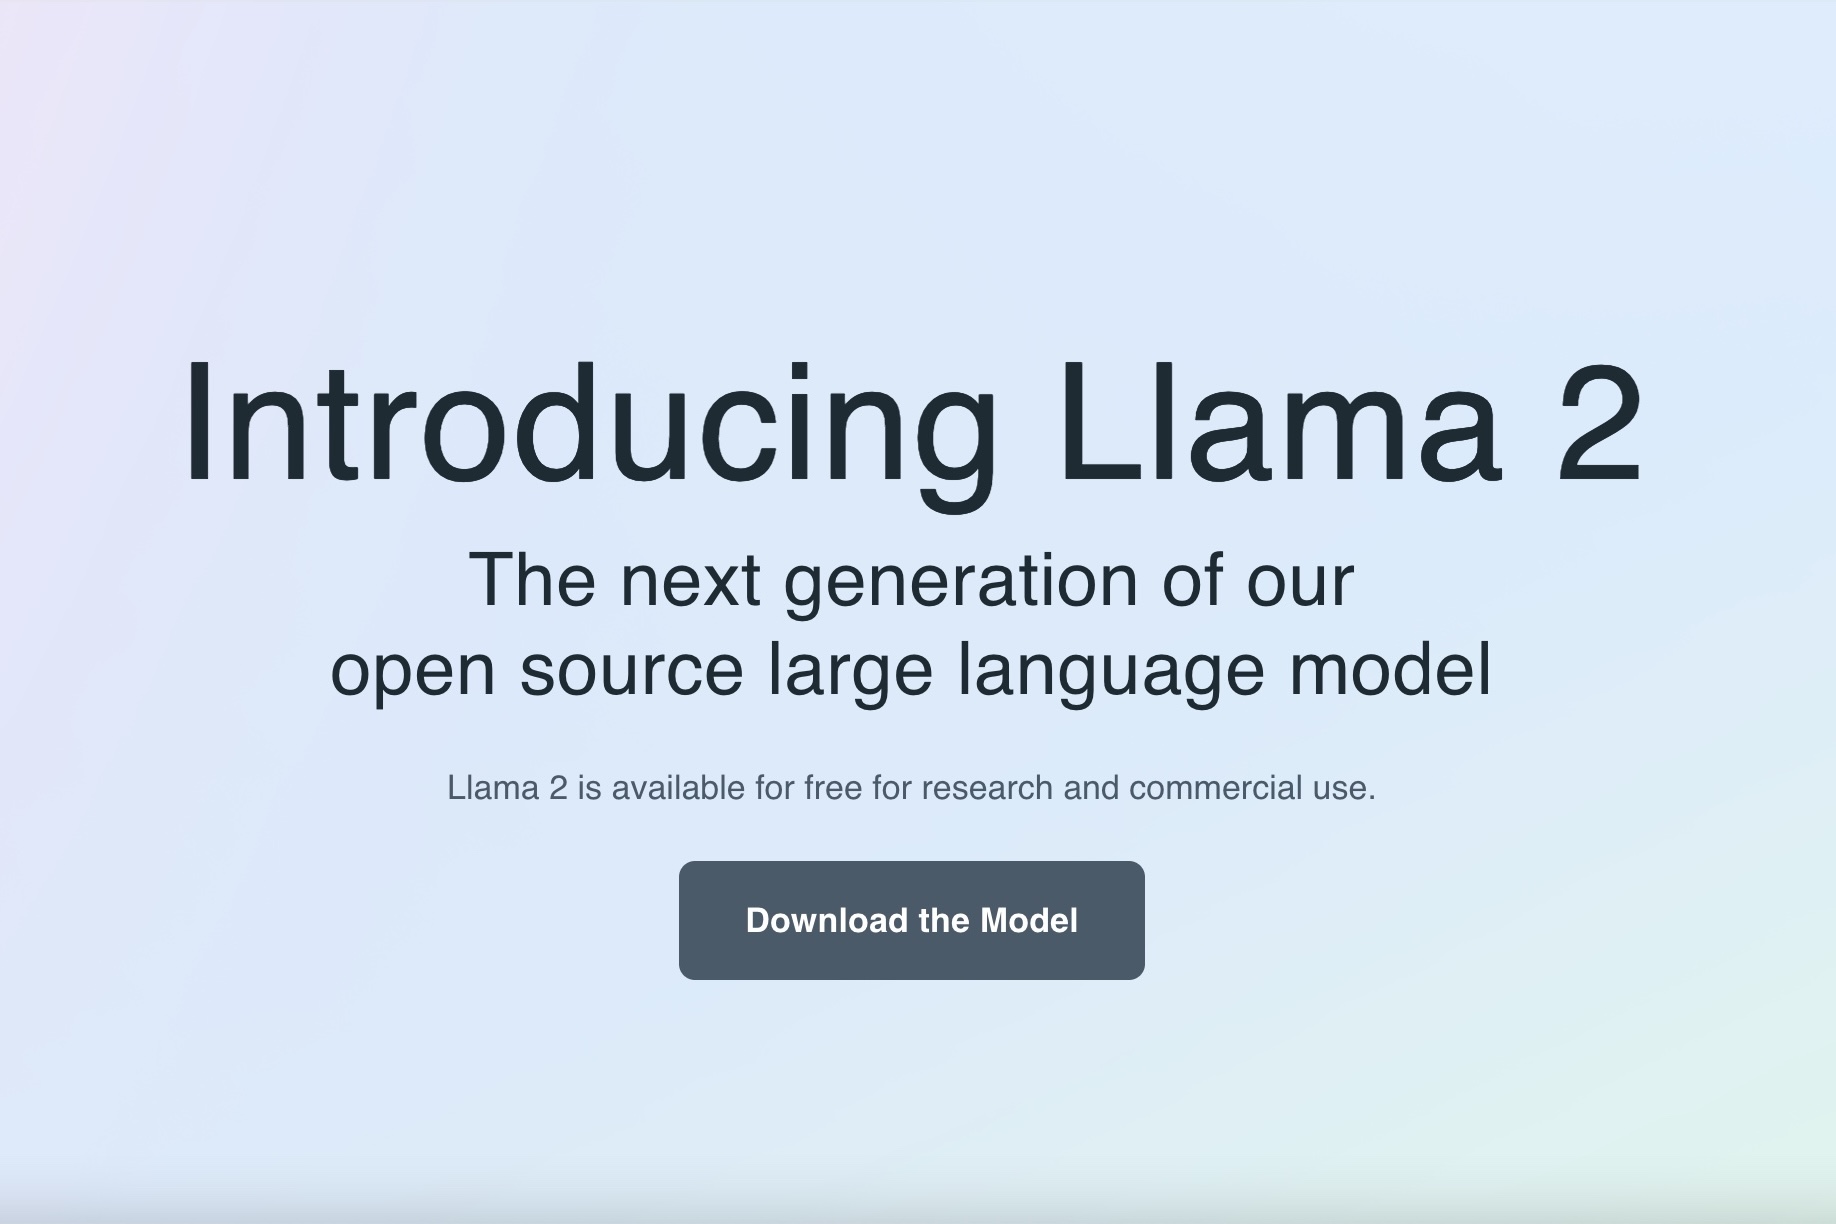 llama home page on Meta's website